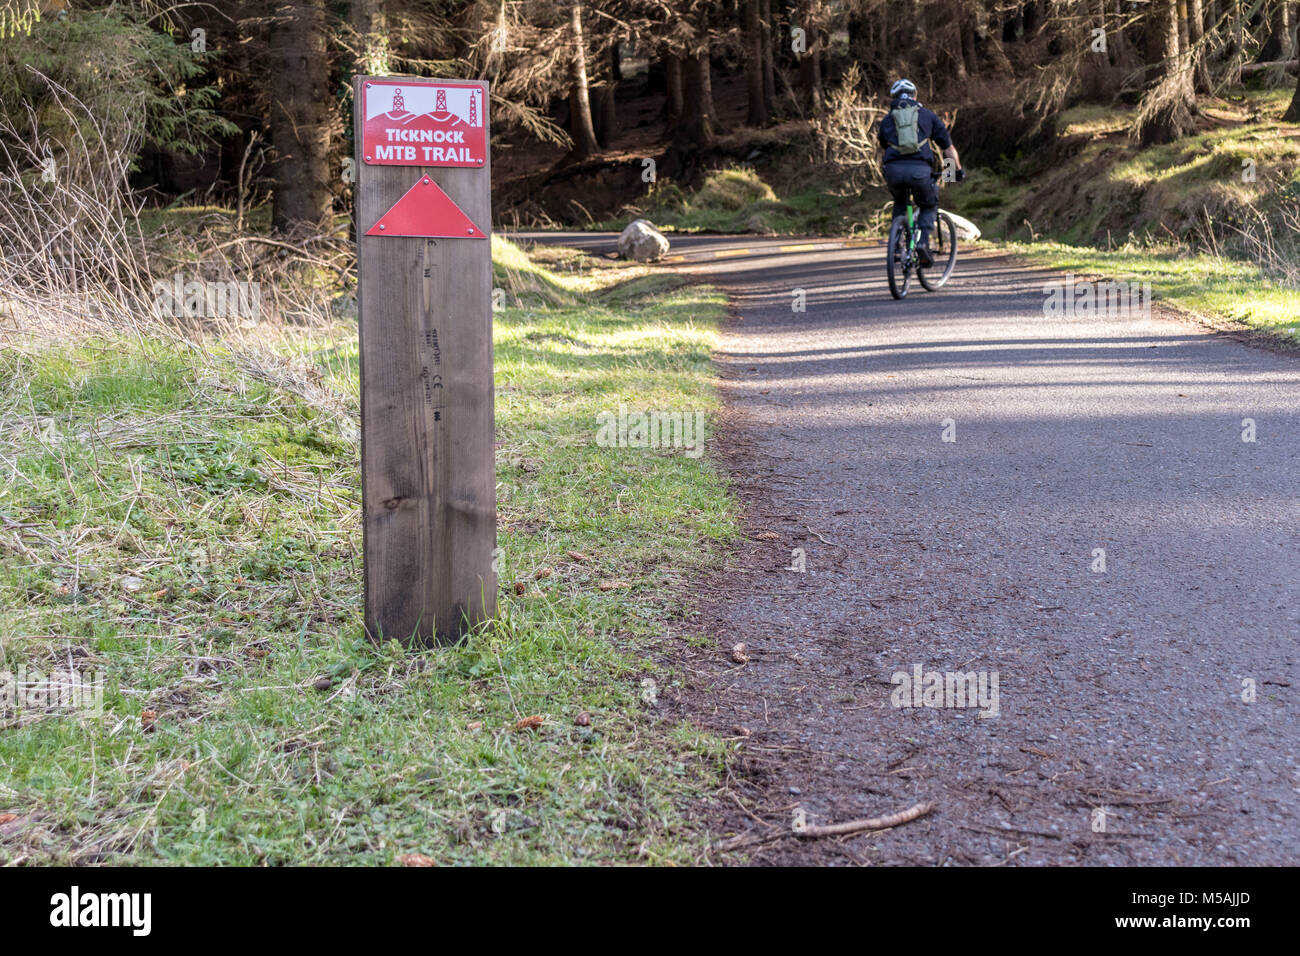 A sign for a mountain bike trail, Ticknock, Dublin. Stock Photo